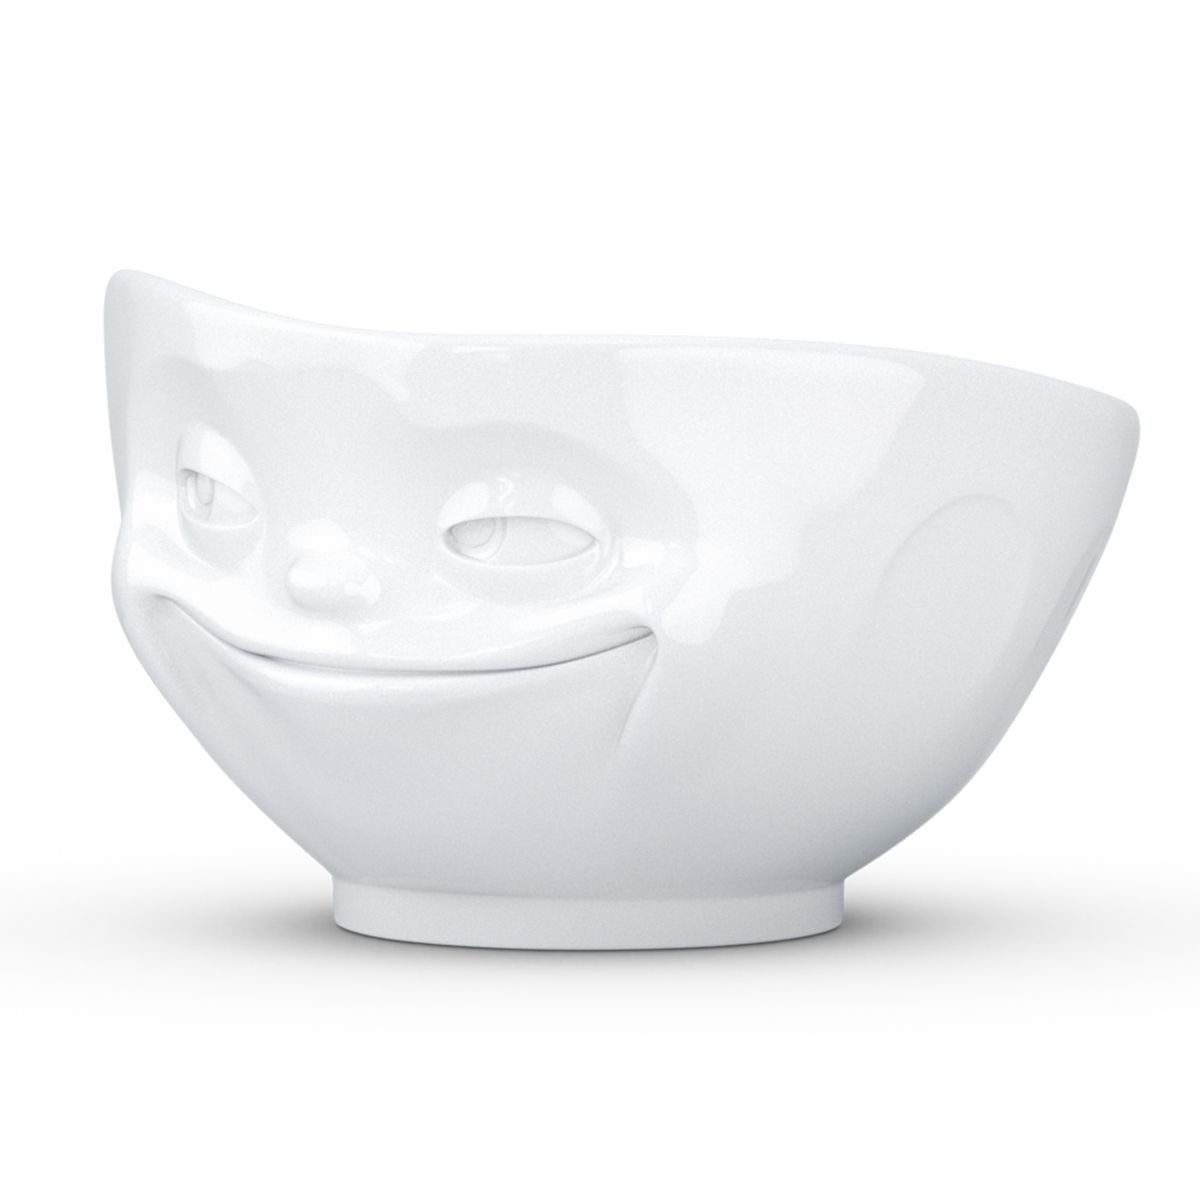 XL Mood Porcelain Bowl by Tassen 1000 ml - Smart